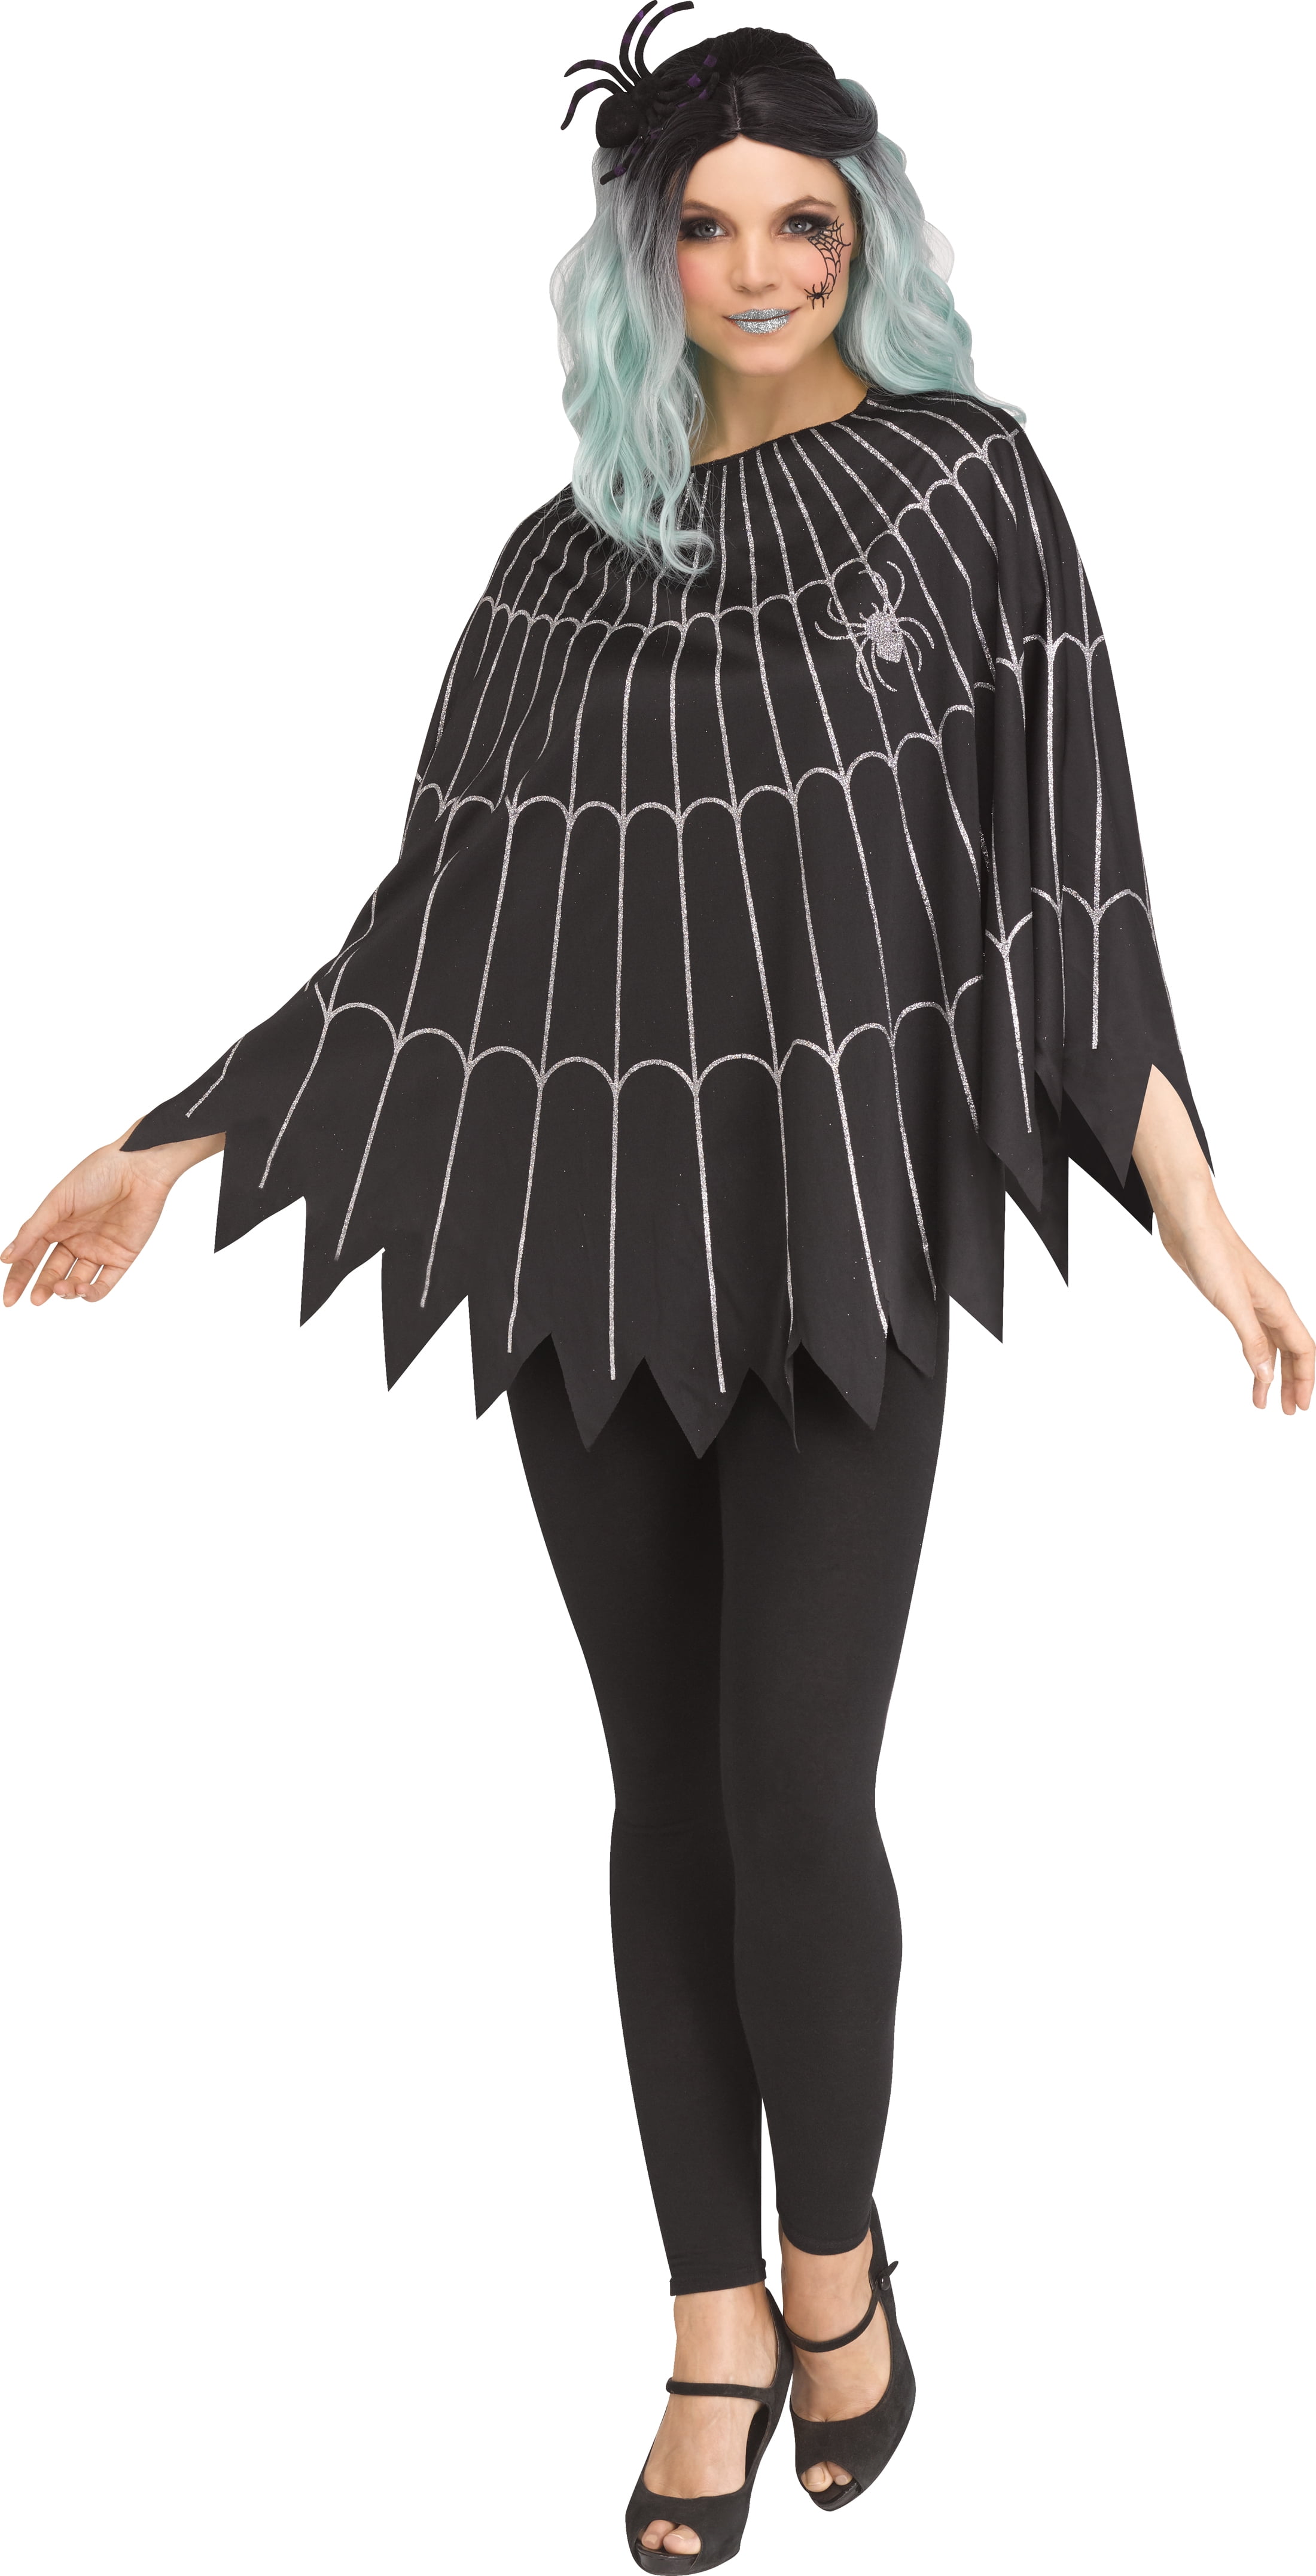 Spiderweb Poncho Women's Halloween Fancy-Dress Costume for Adult, 14